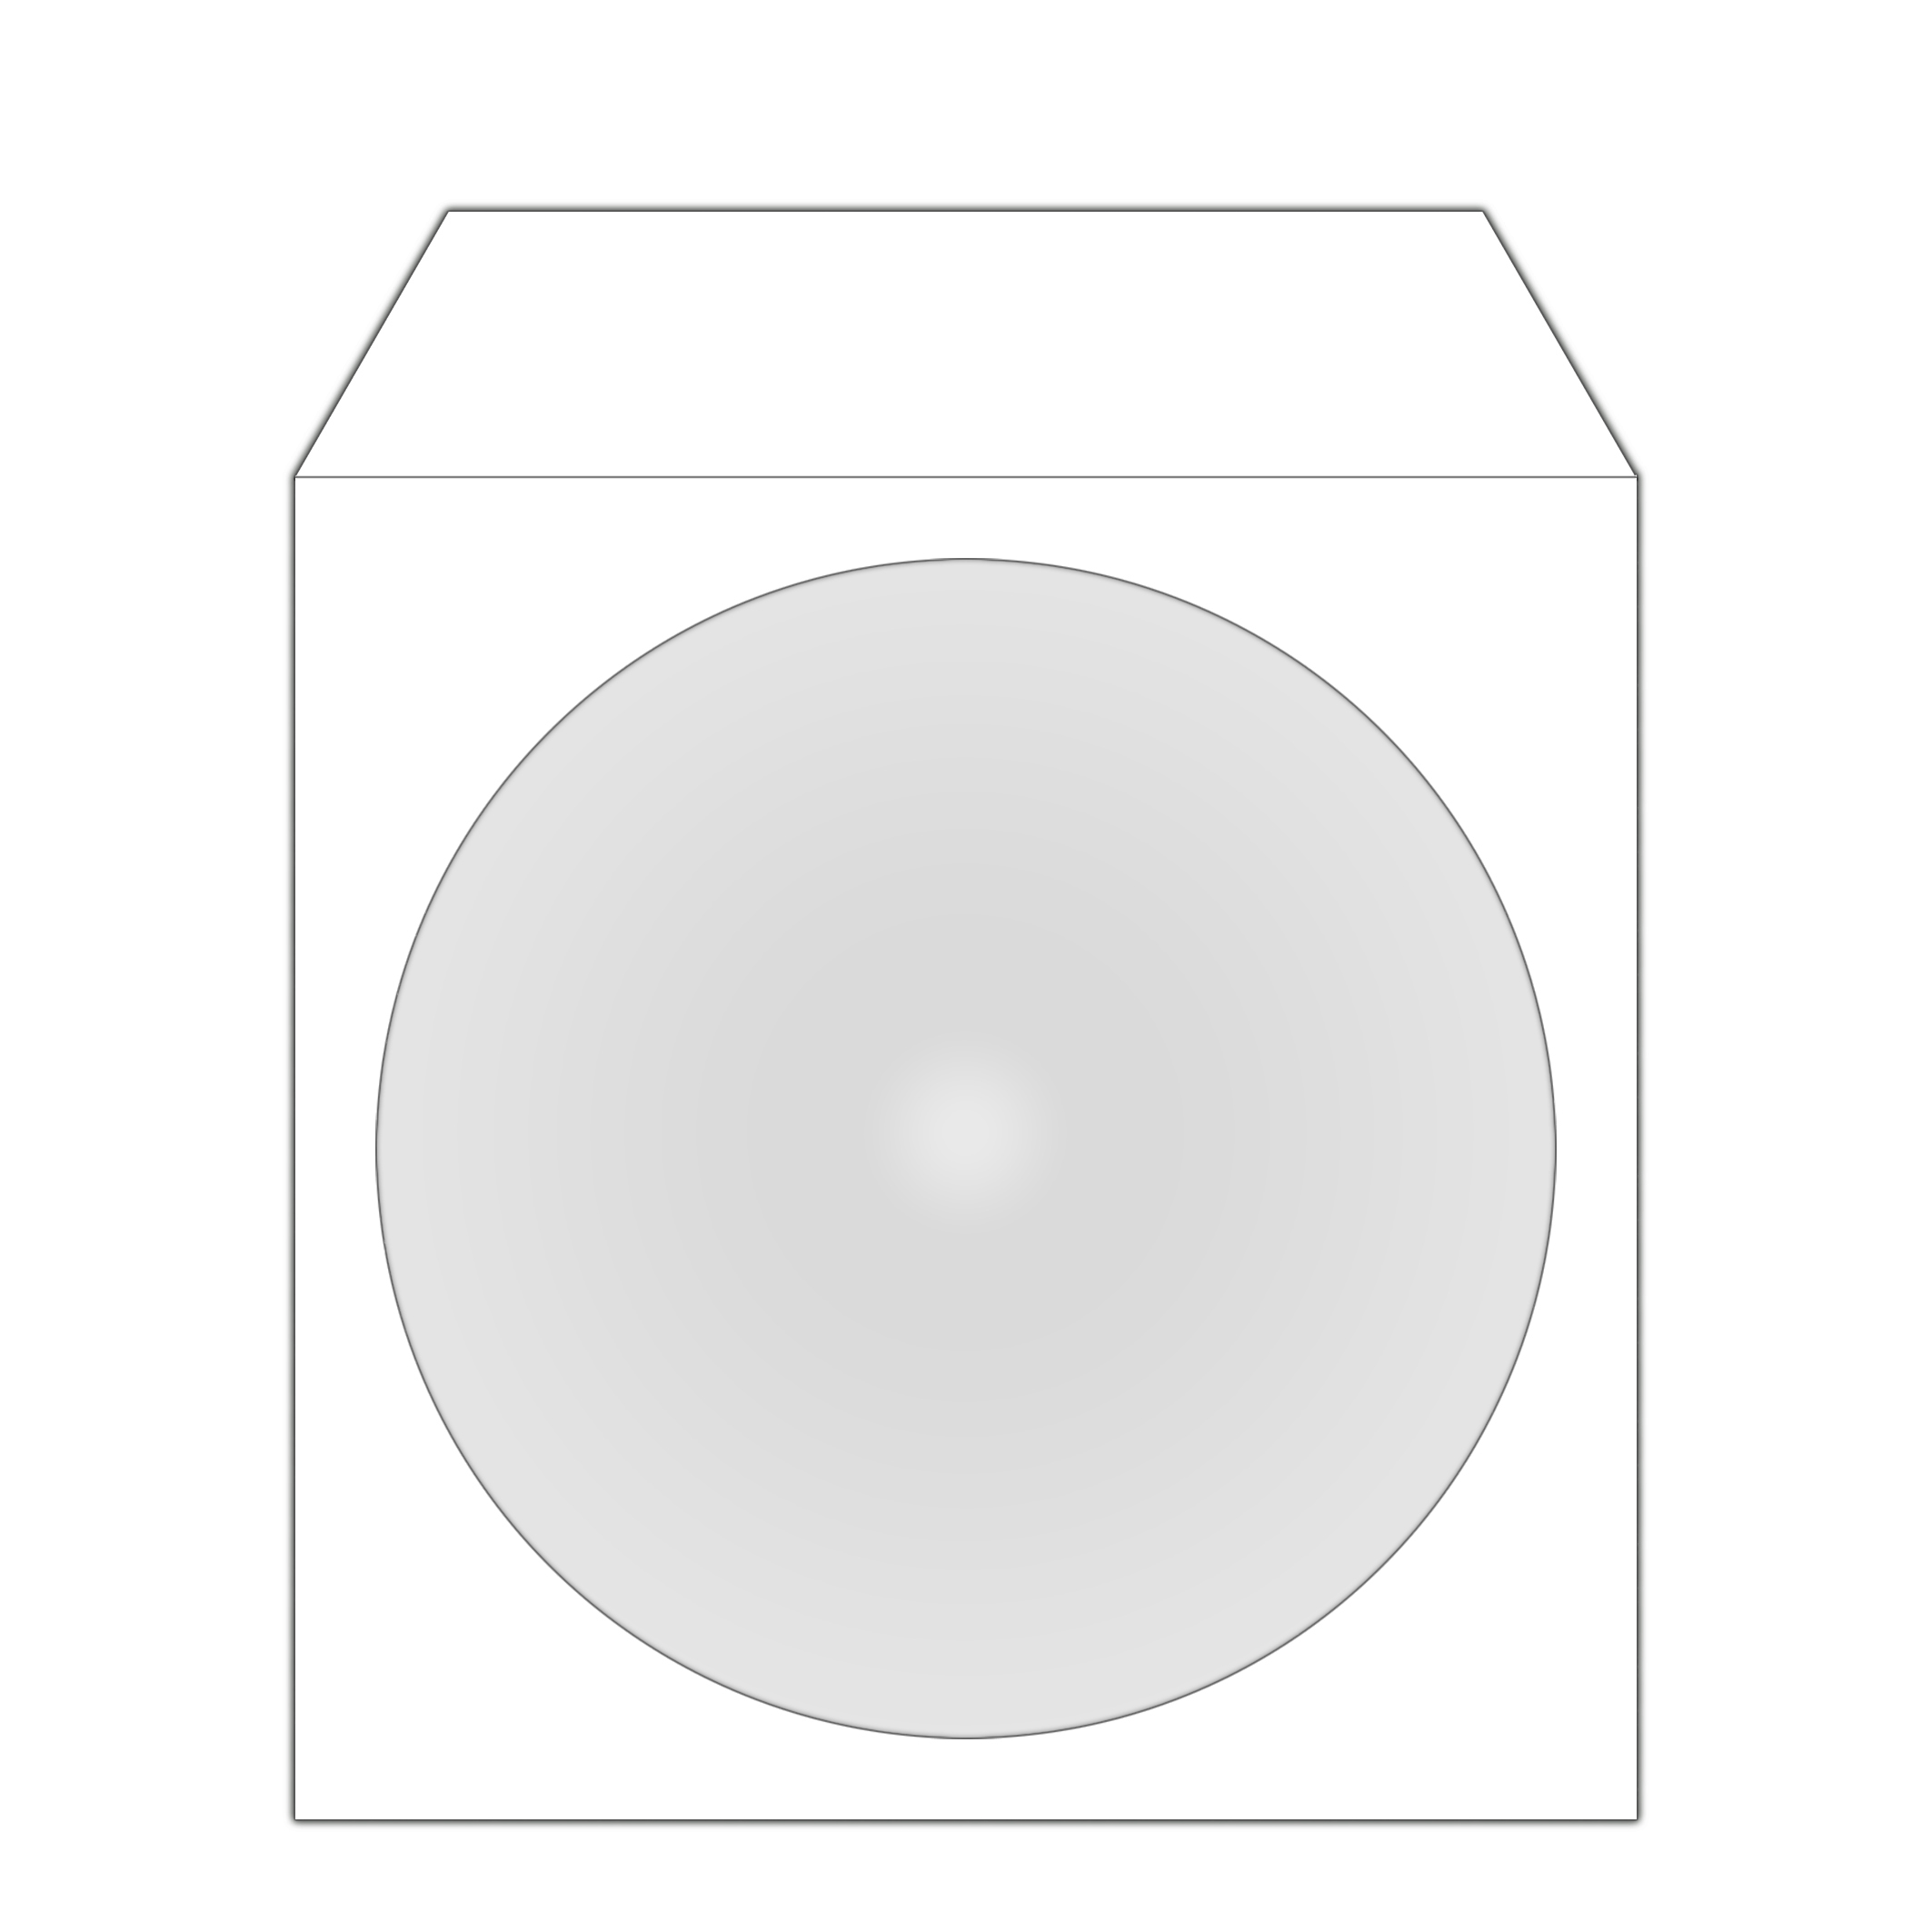 MEDIARANGE BOX62 - Schutzhülle - 1 Disks - Weiß - Papier - 120 mm - 125 mm